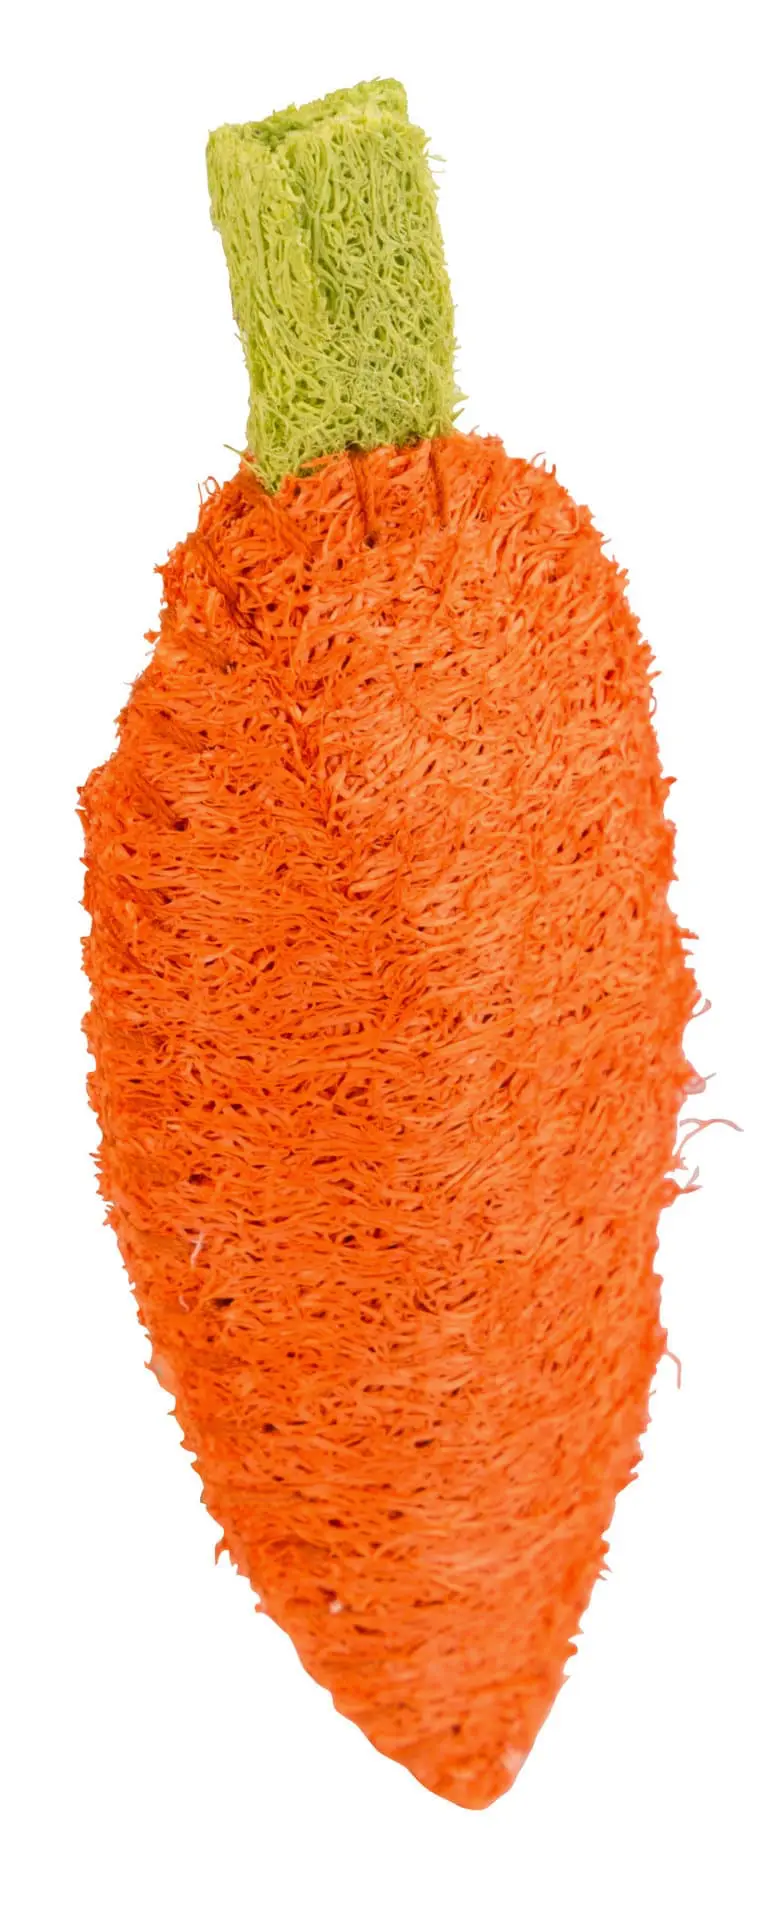 Loofah carrot 10cm